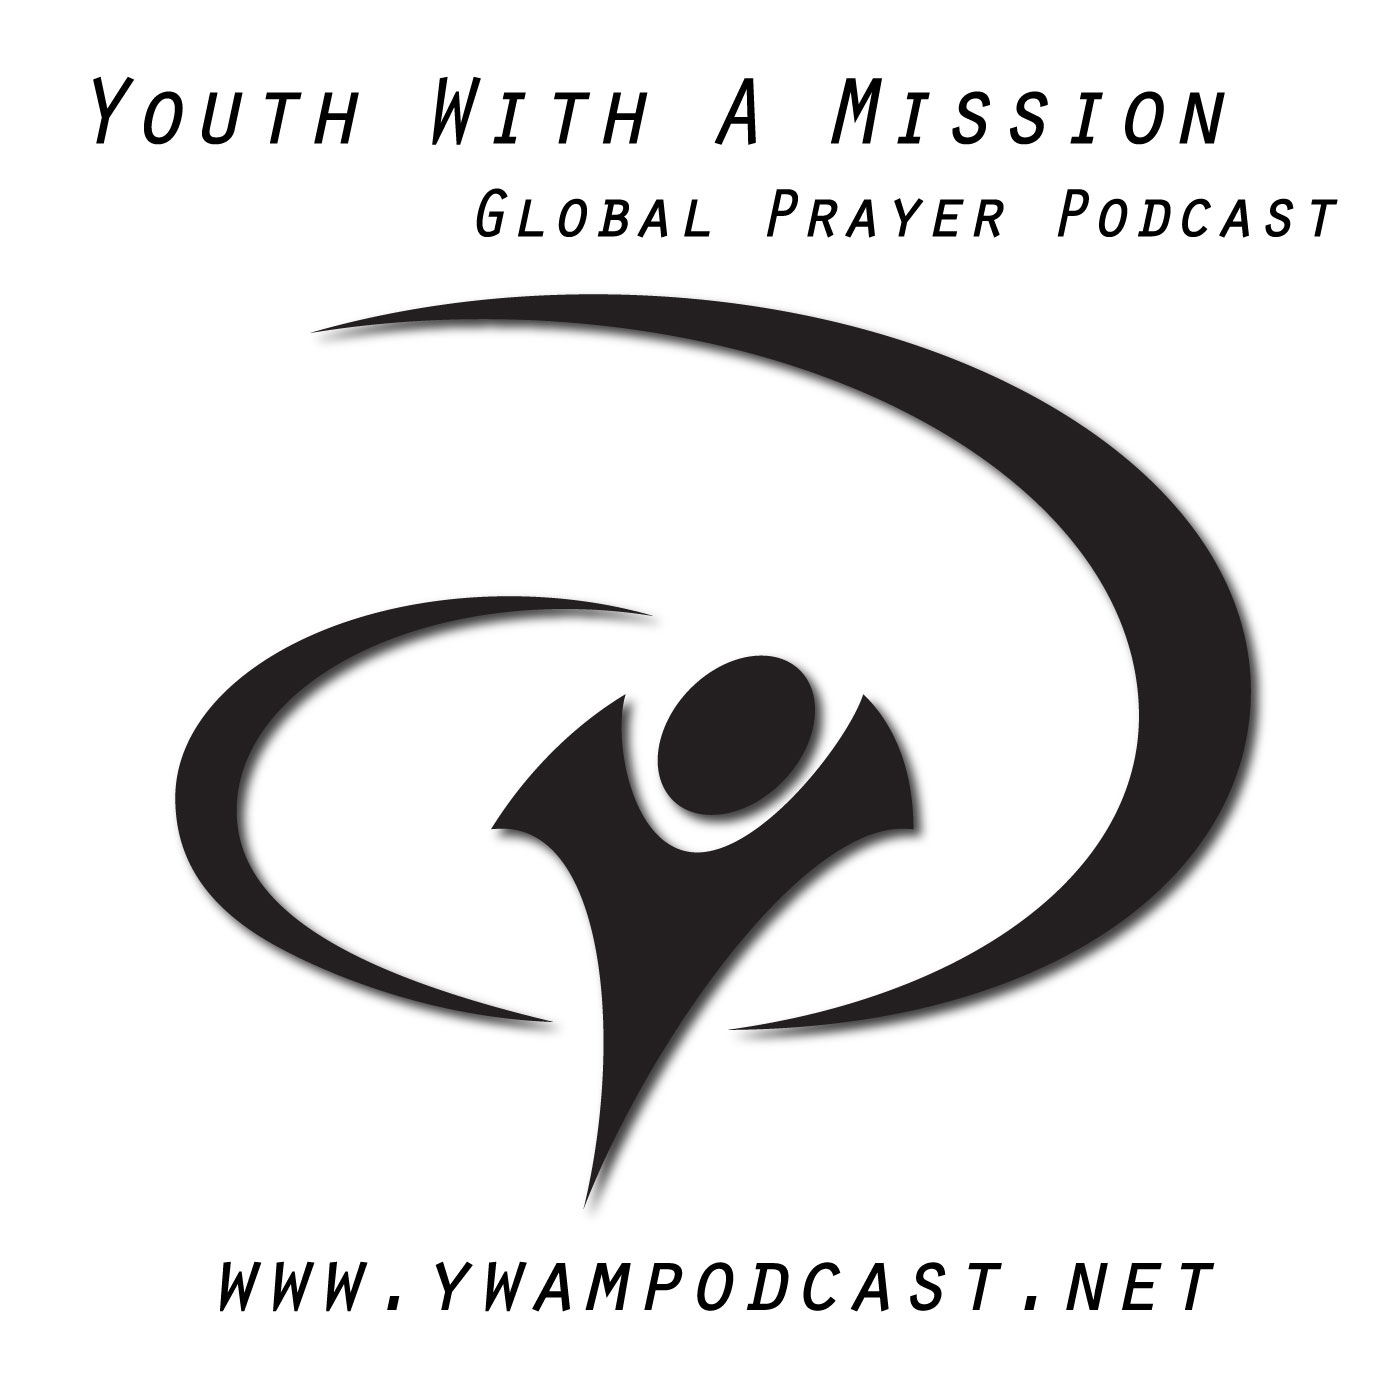 Pray for YWAM’s Global Prayer Initiative